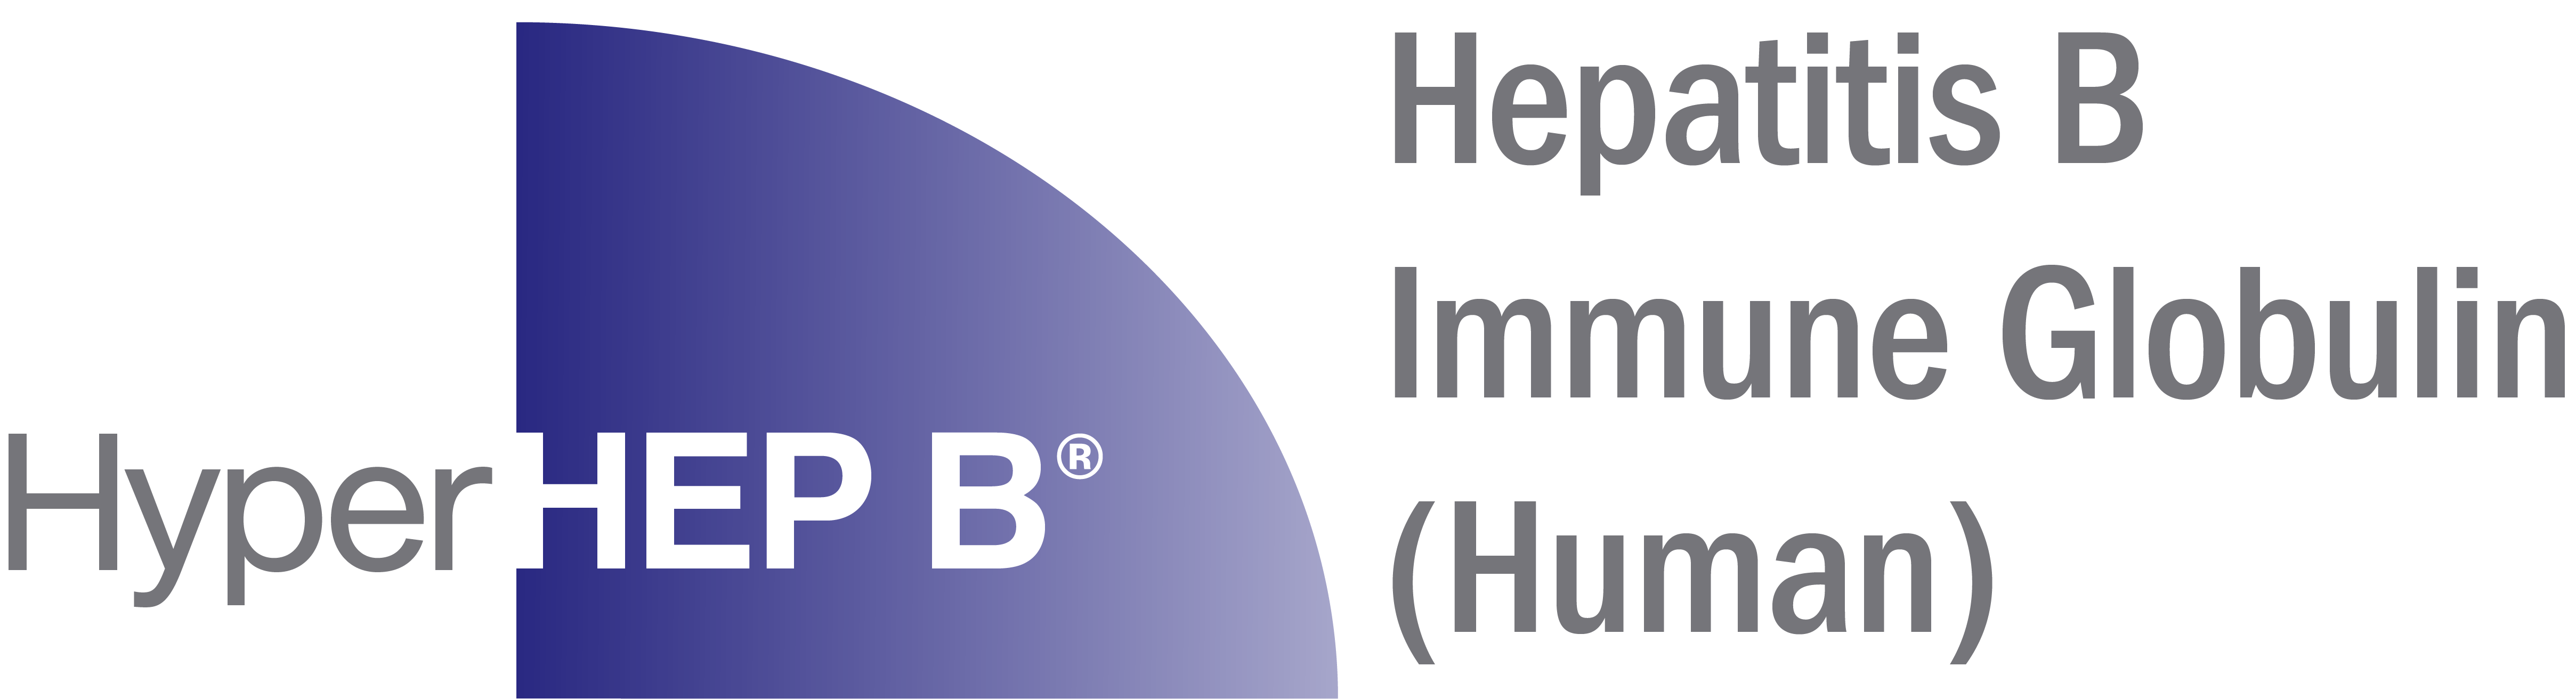 'HyperHEP B' logo